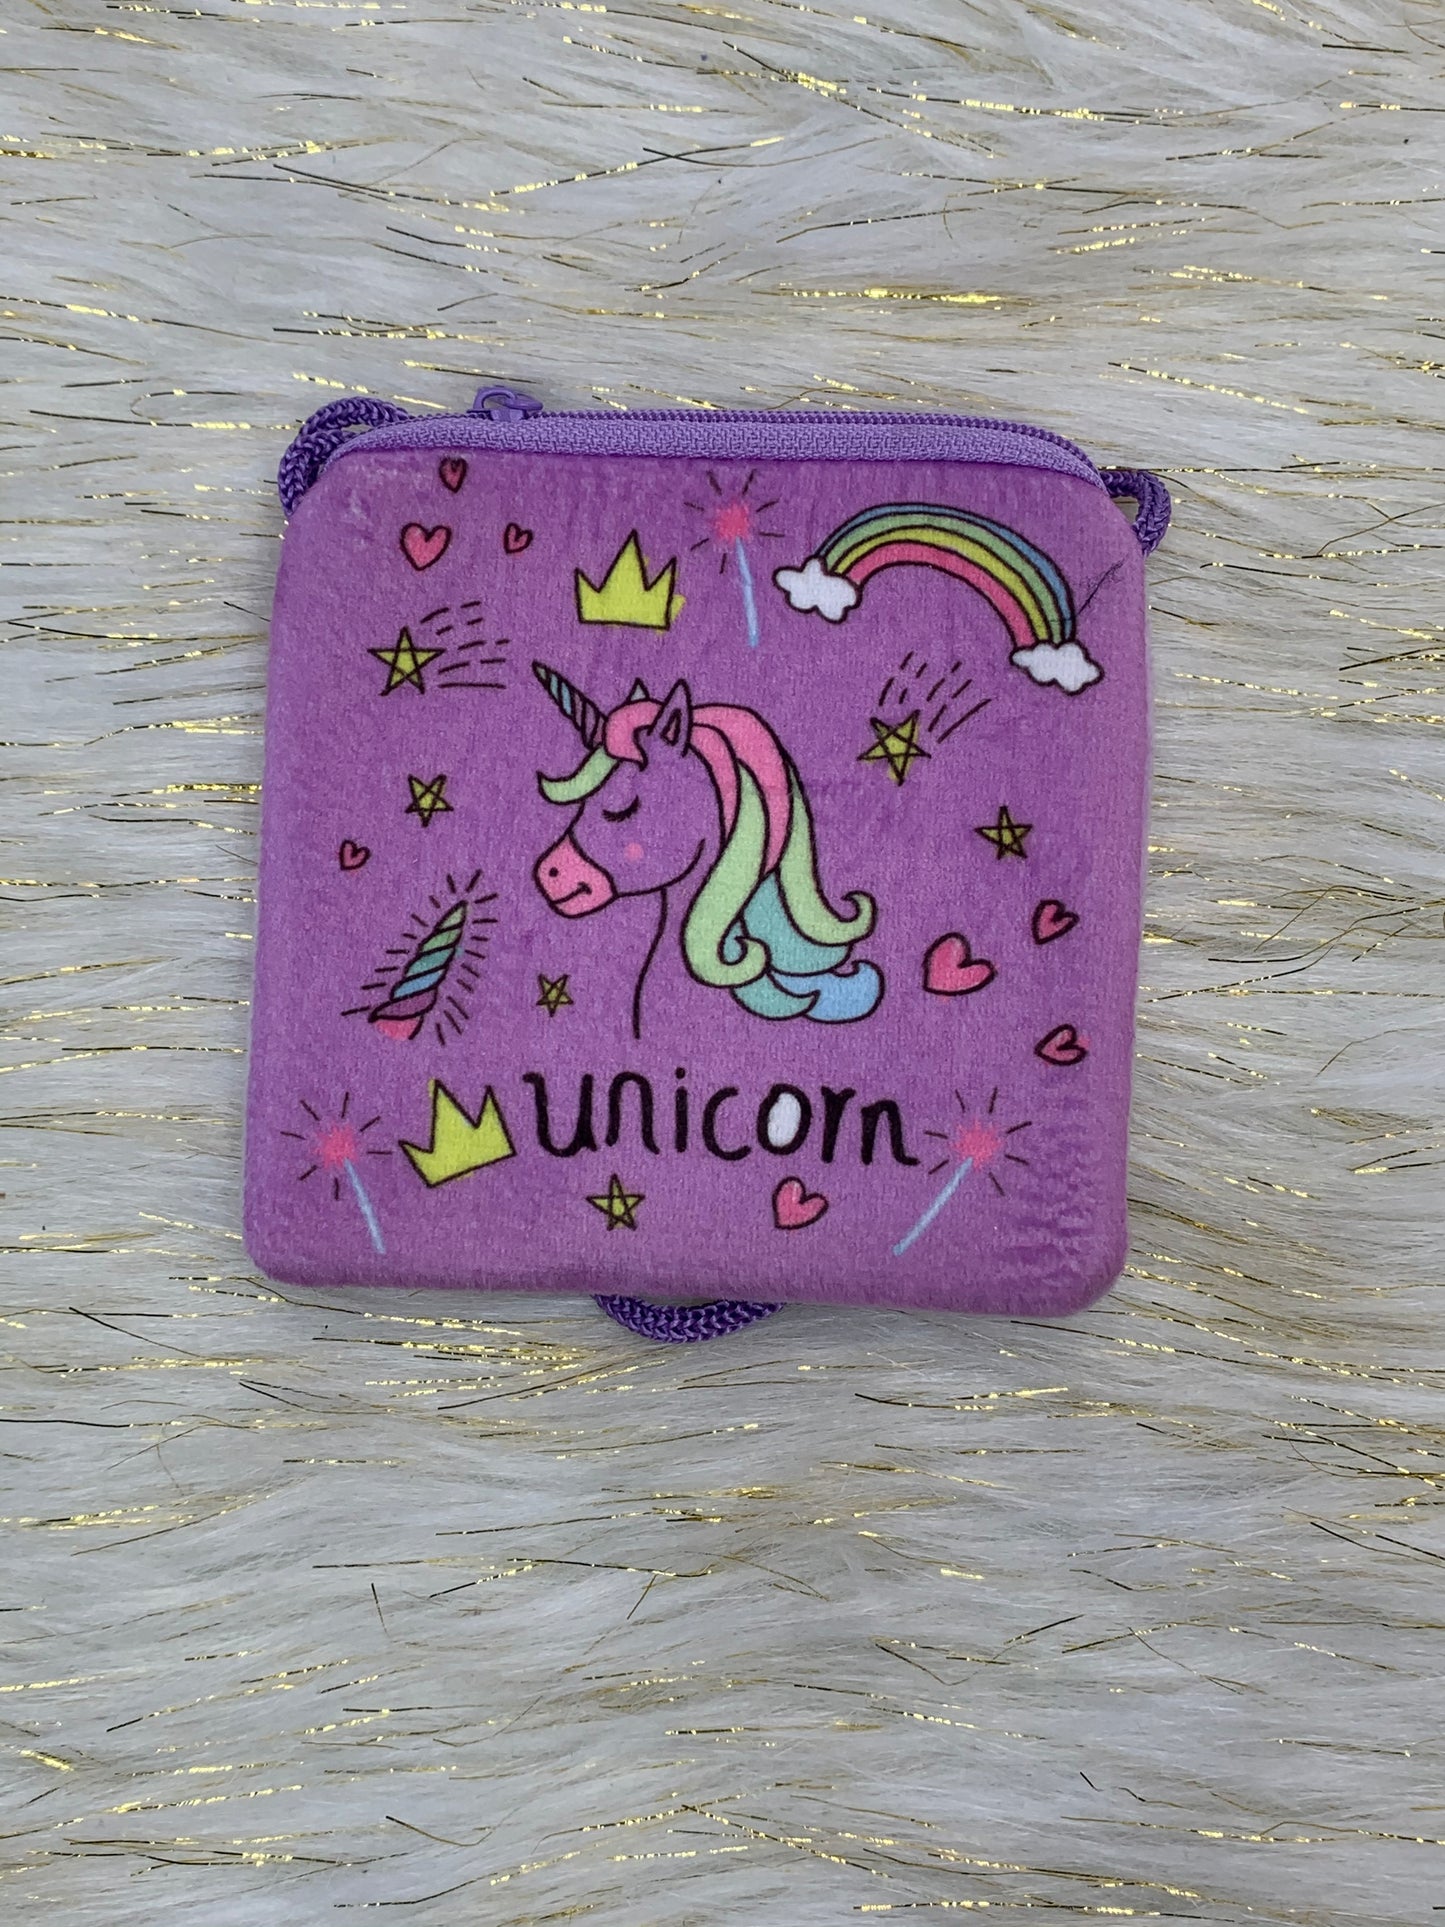 LoL Doll & Unicorn coin purses